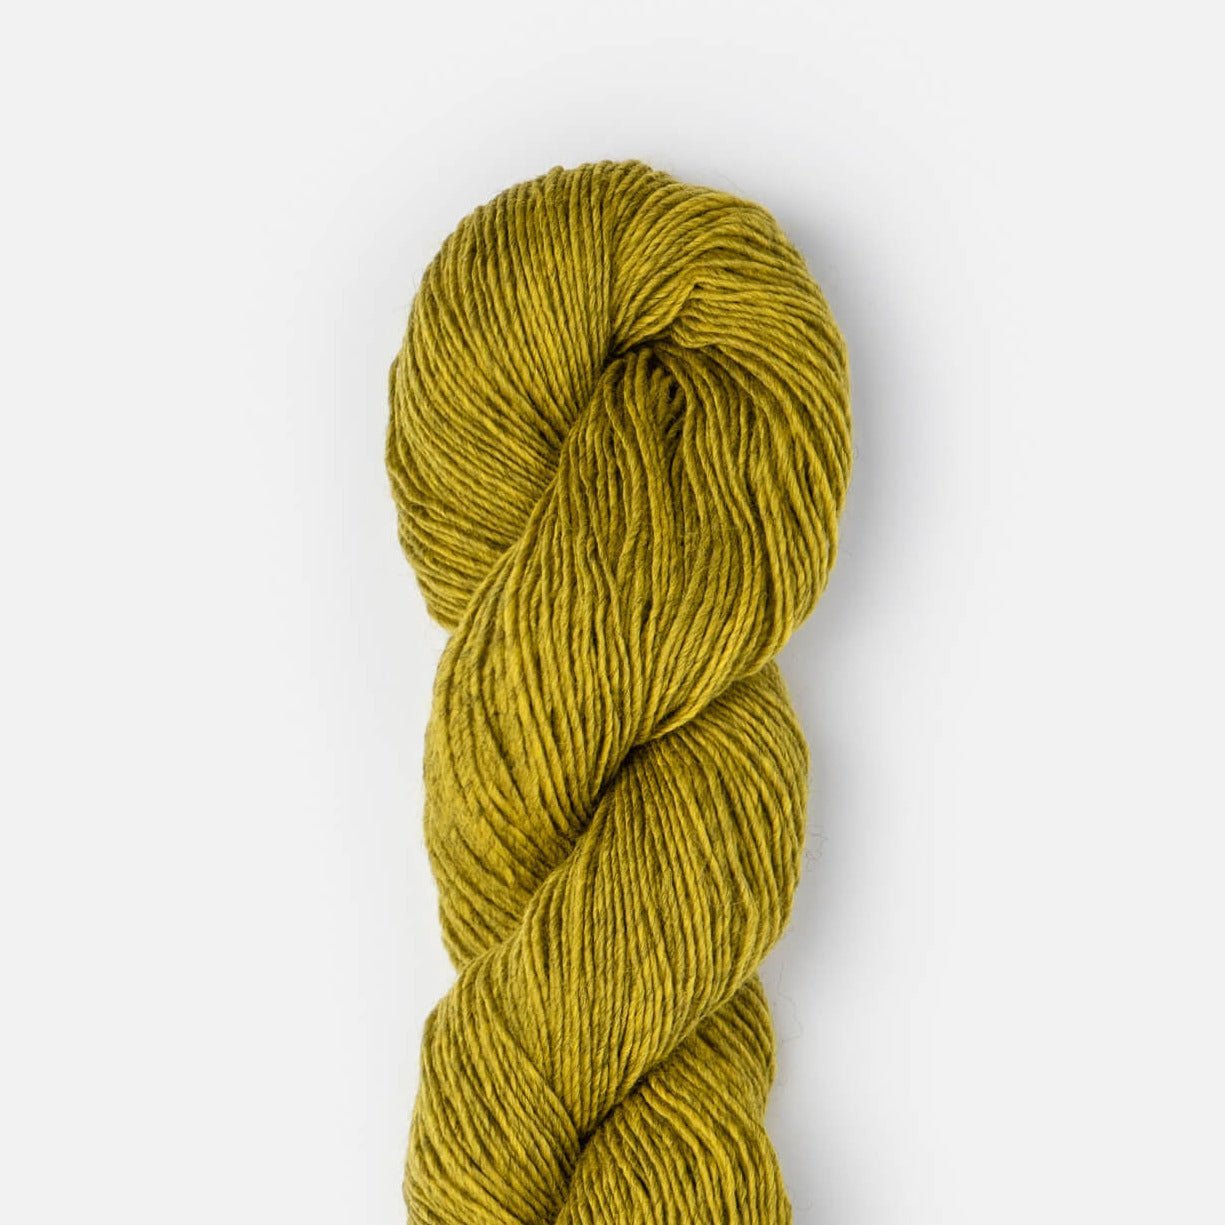 Tivoli Shawl Knitting Kit - Mary Pranica - 2308 Golden Meadow - The Little Yarn Store